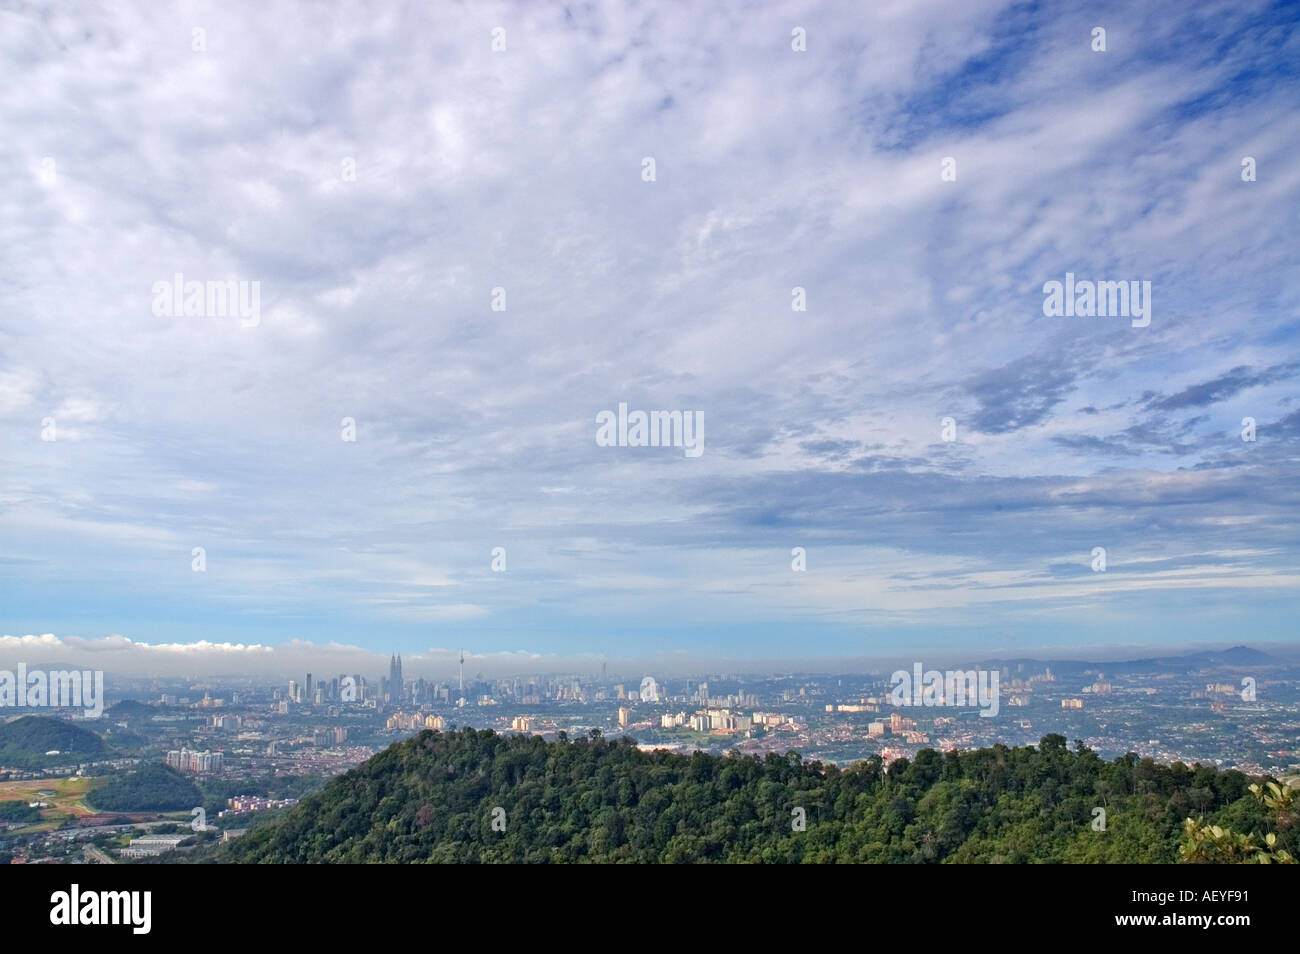 View of Kuala Lumpur city from Bukit Tabur quartz ridge in Selangor, Malaysia Stock Photo